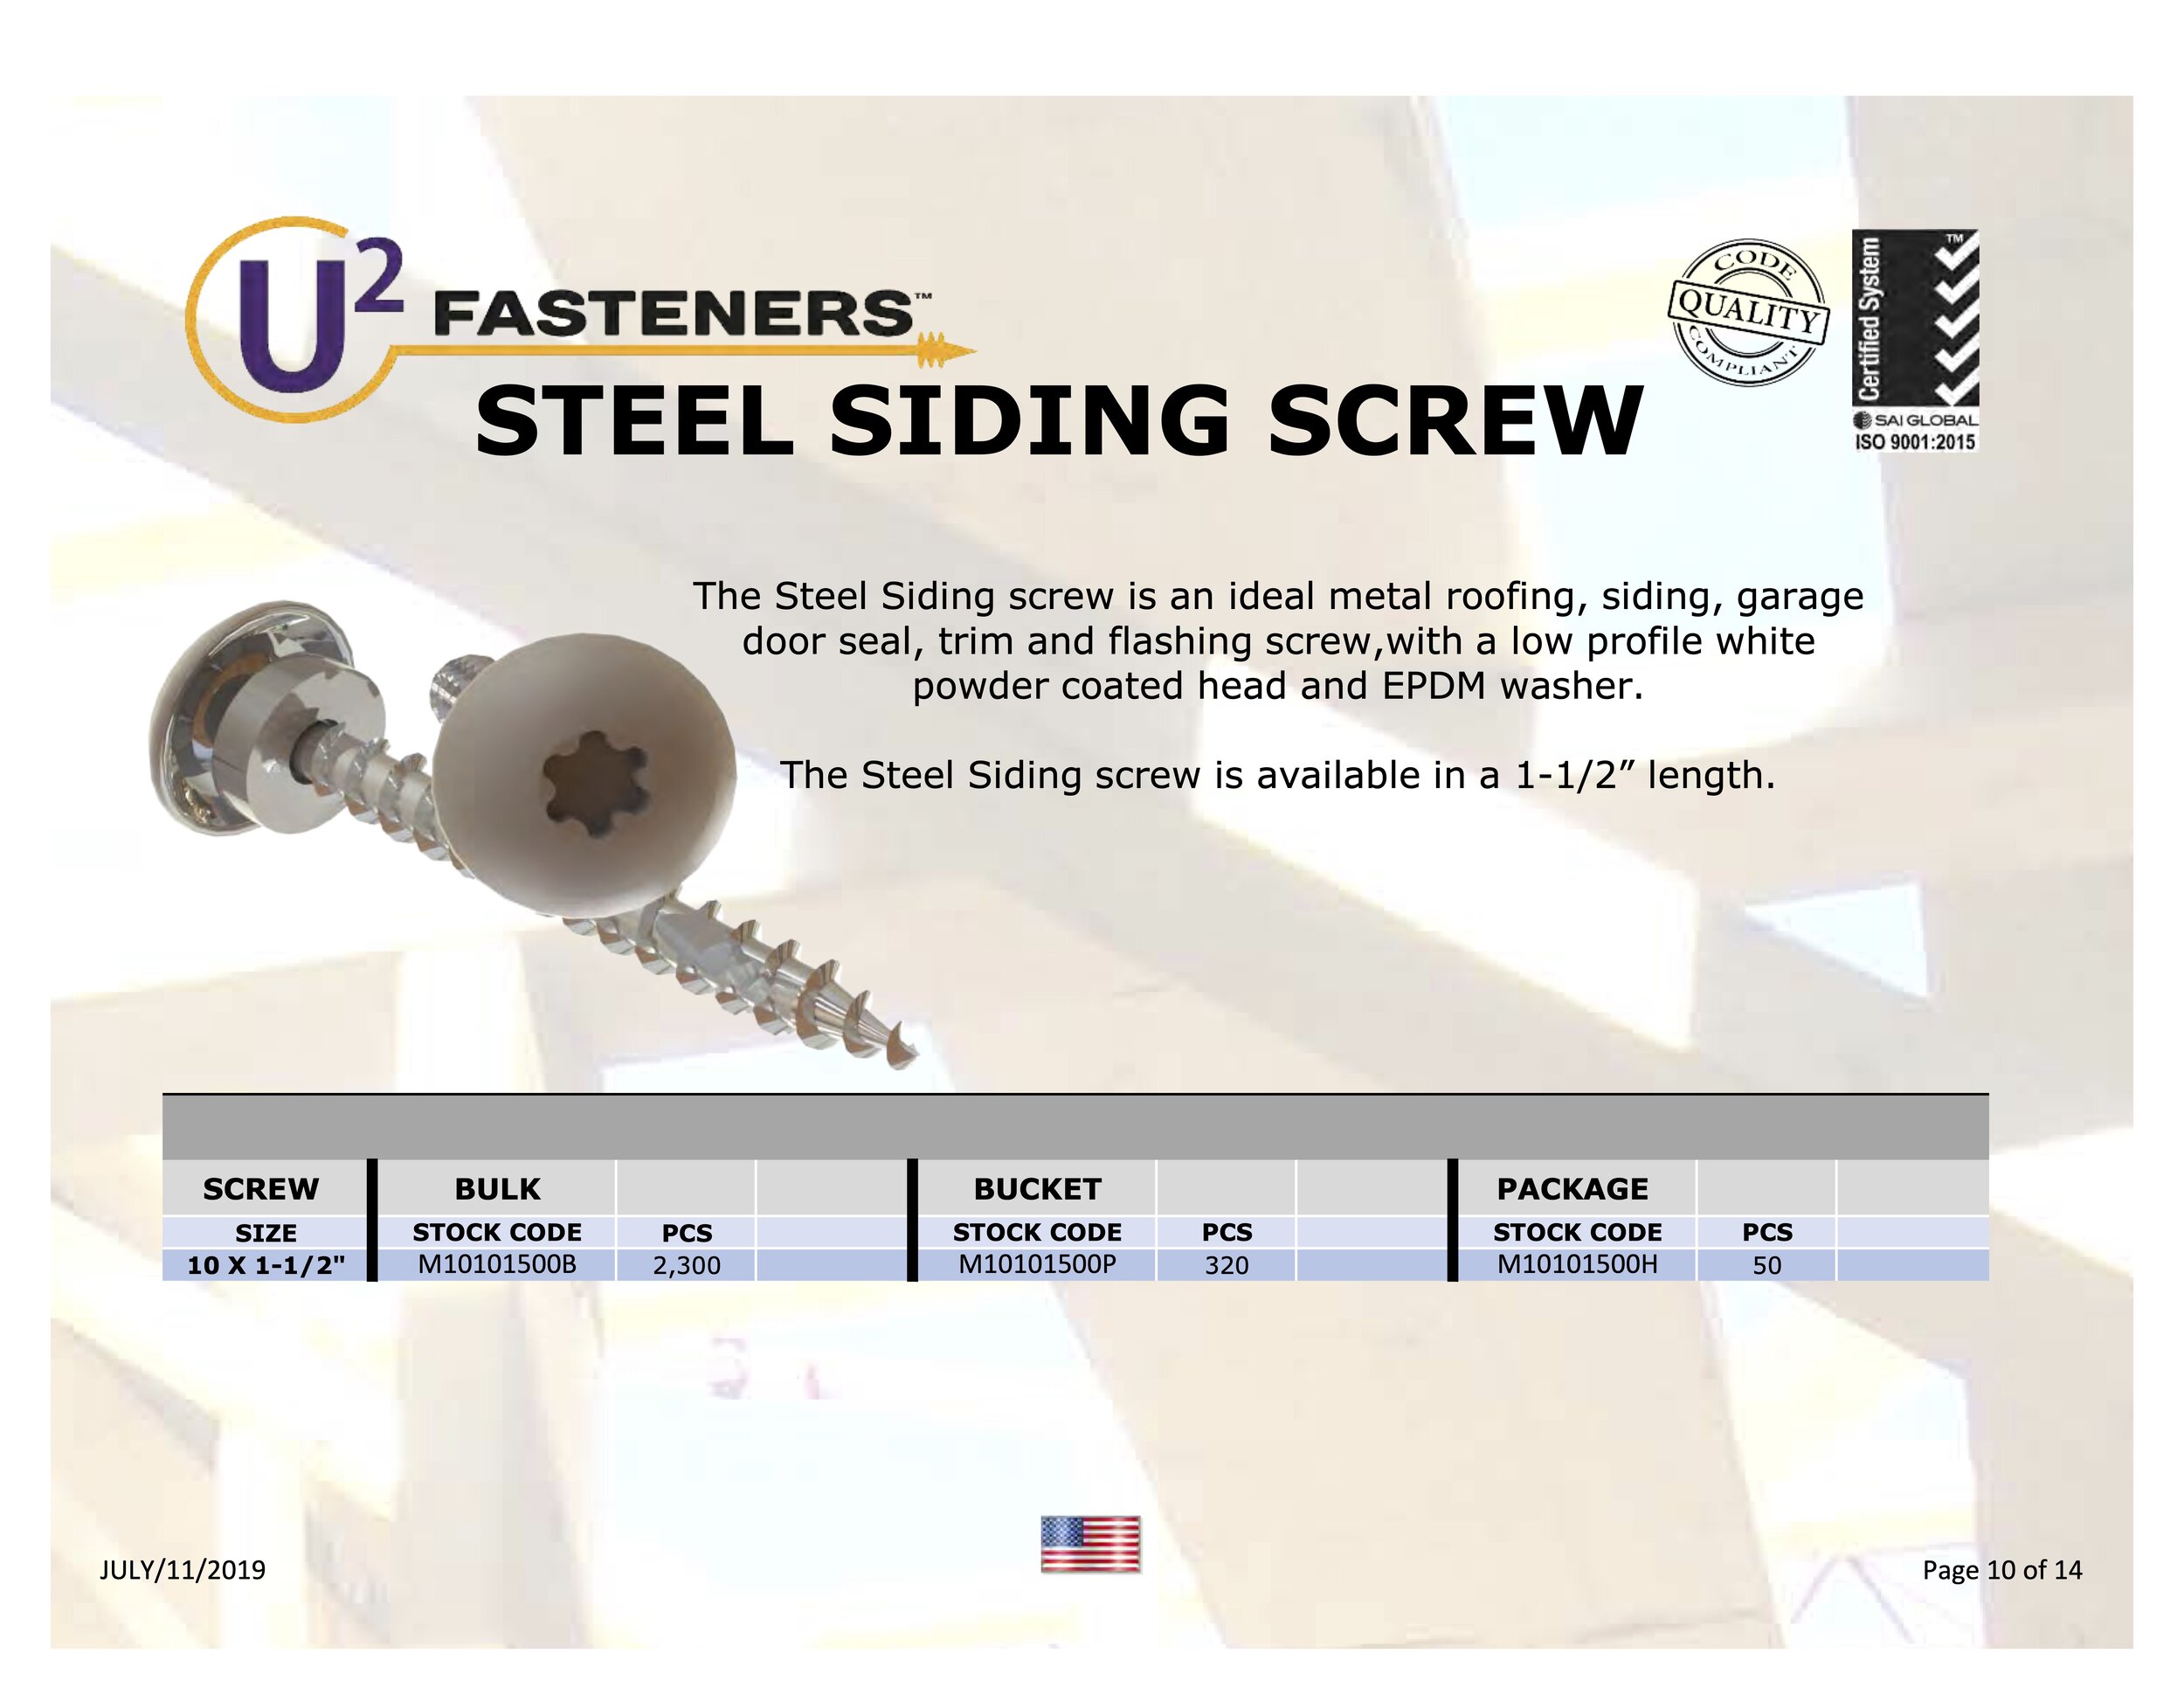 Steel Siding Screw2 - U2.jpg